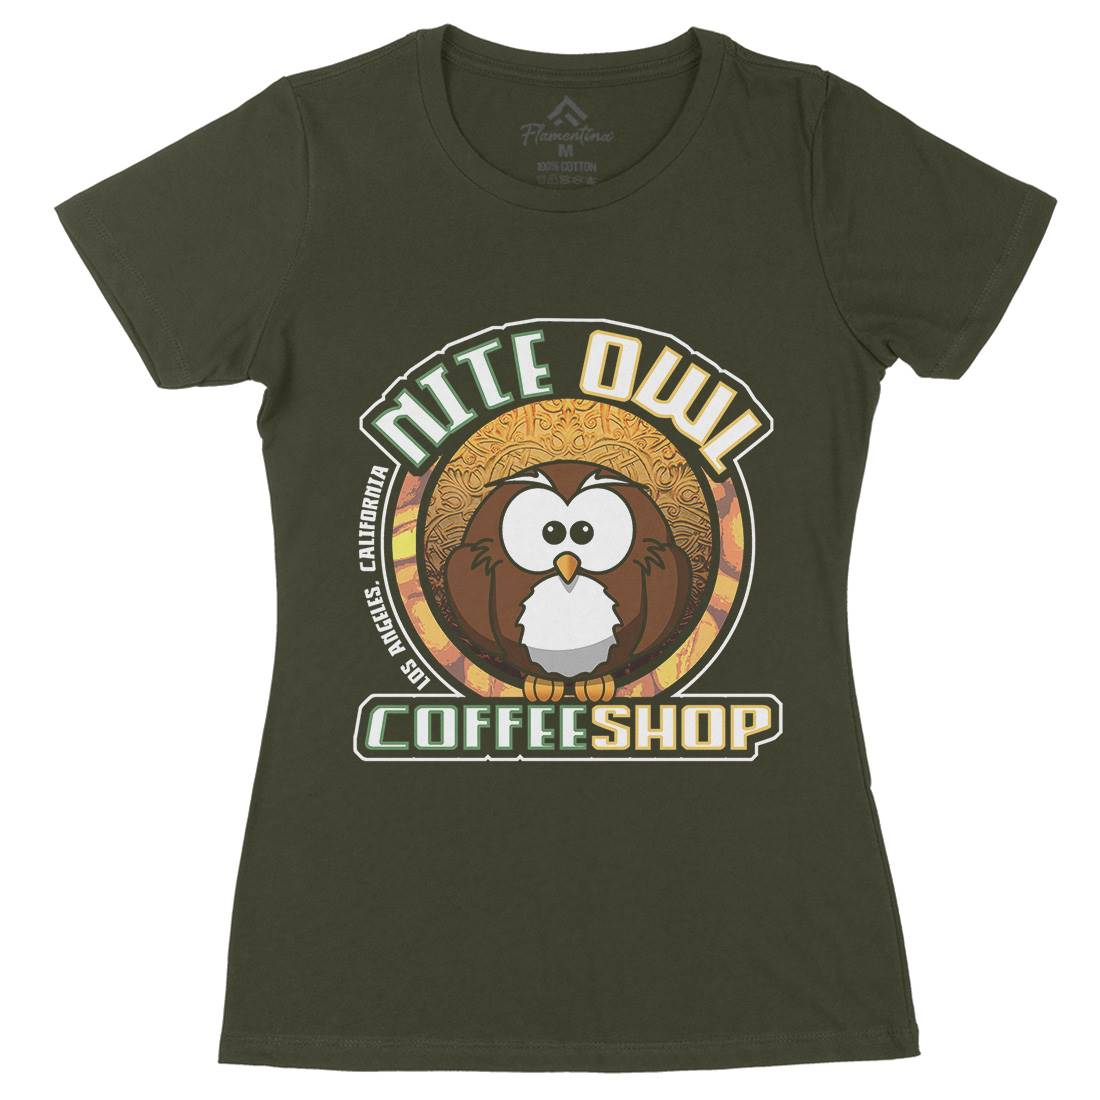 Nite Owl Womens Organic Crew Neck T-Shirt Drinks D416